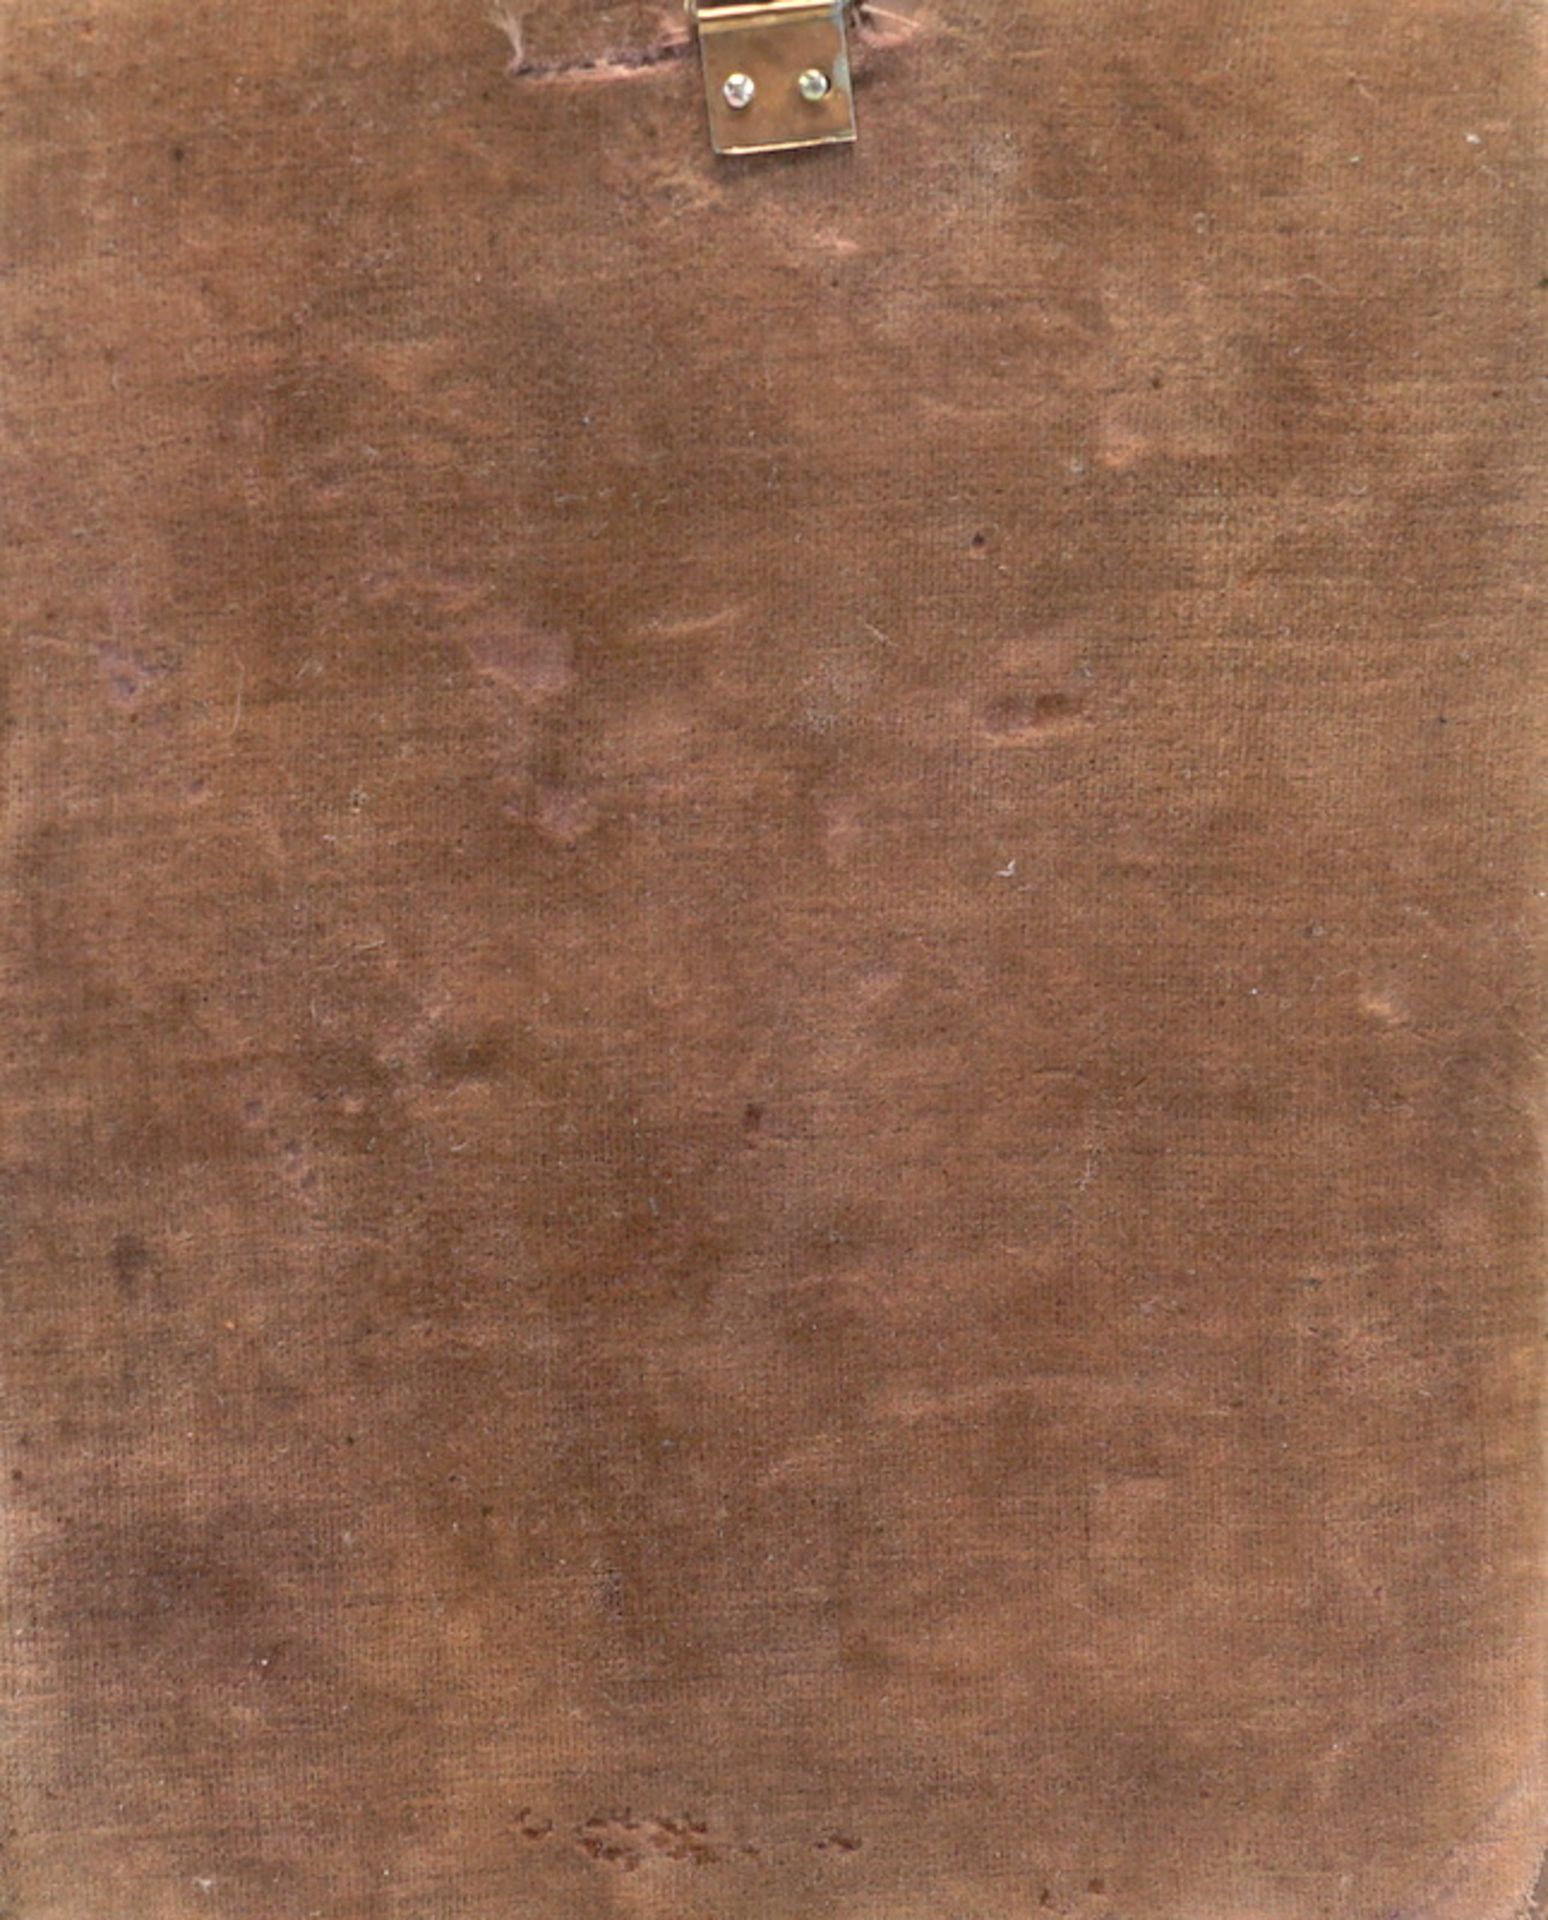 Christus Pantokrator Silberoklad Moskau 1883 Meister HC - Image 4 of 4